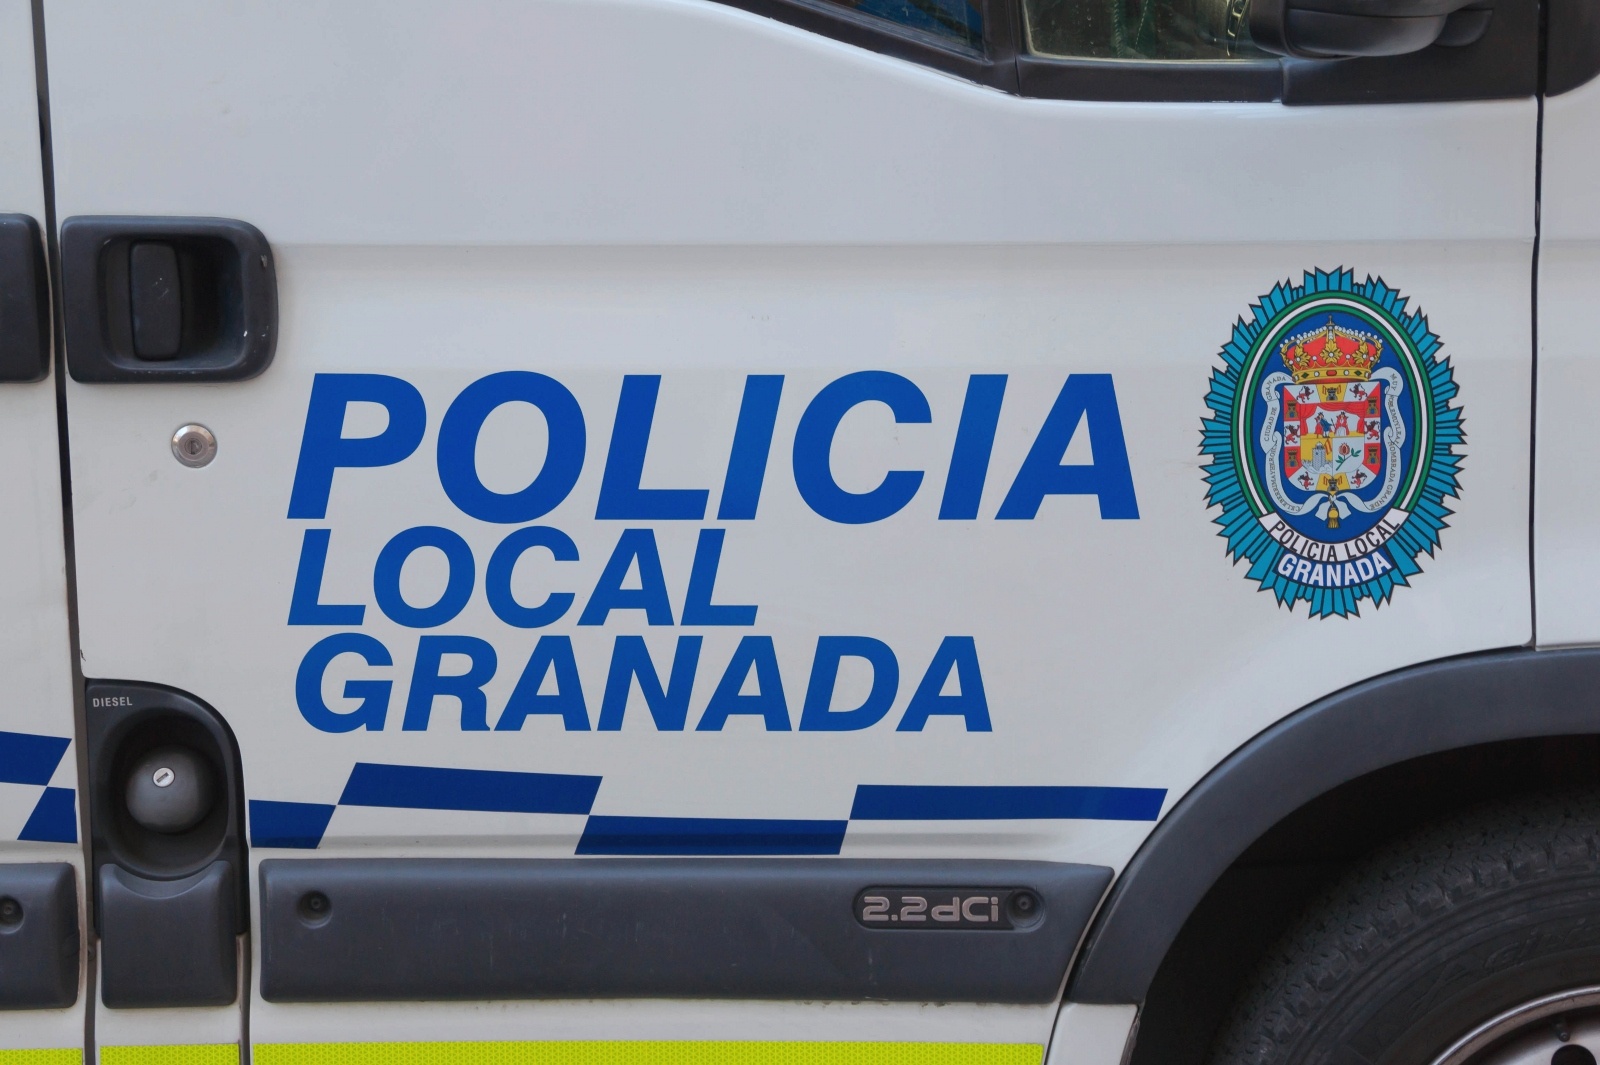 Policia local Granada car detail (1)